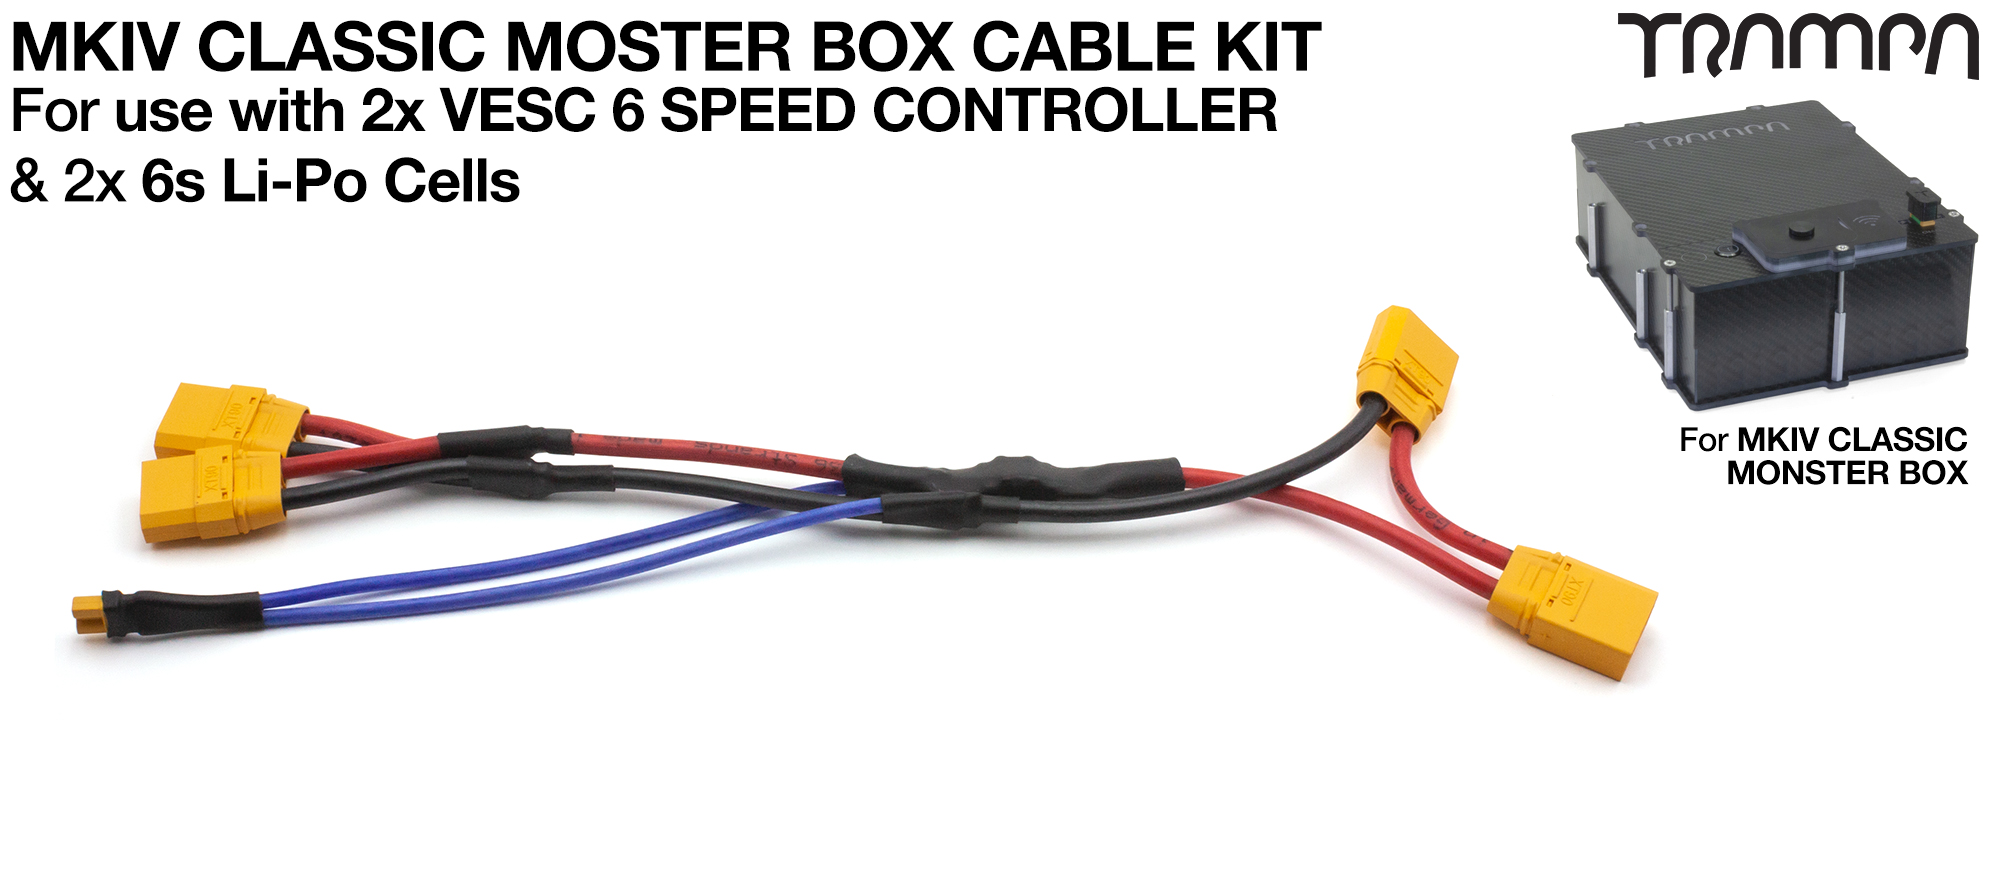 MASSIVE Monster Box cable kit for 2x VESC 6 using 2x Li-Po cells 